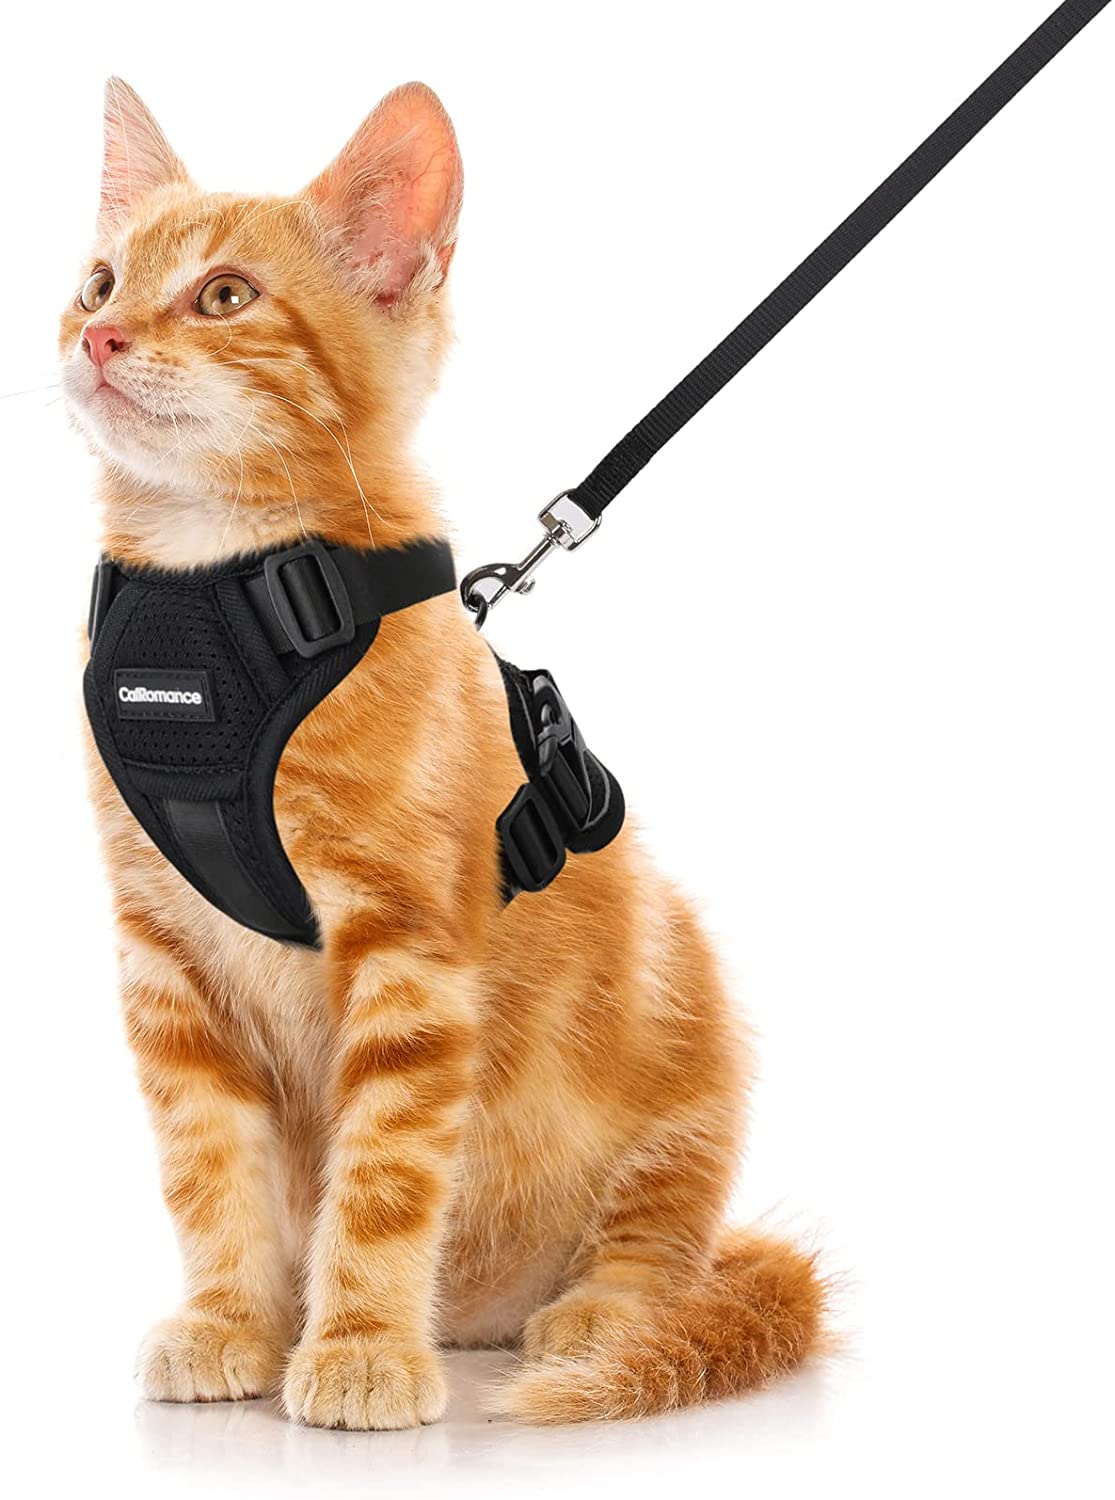 CatRomance anti-escape cat harness and leash set - CatRomance